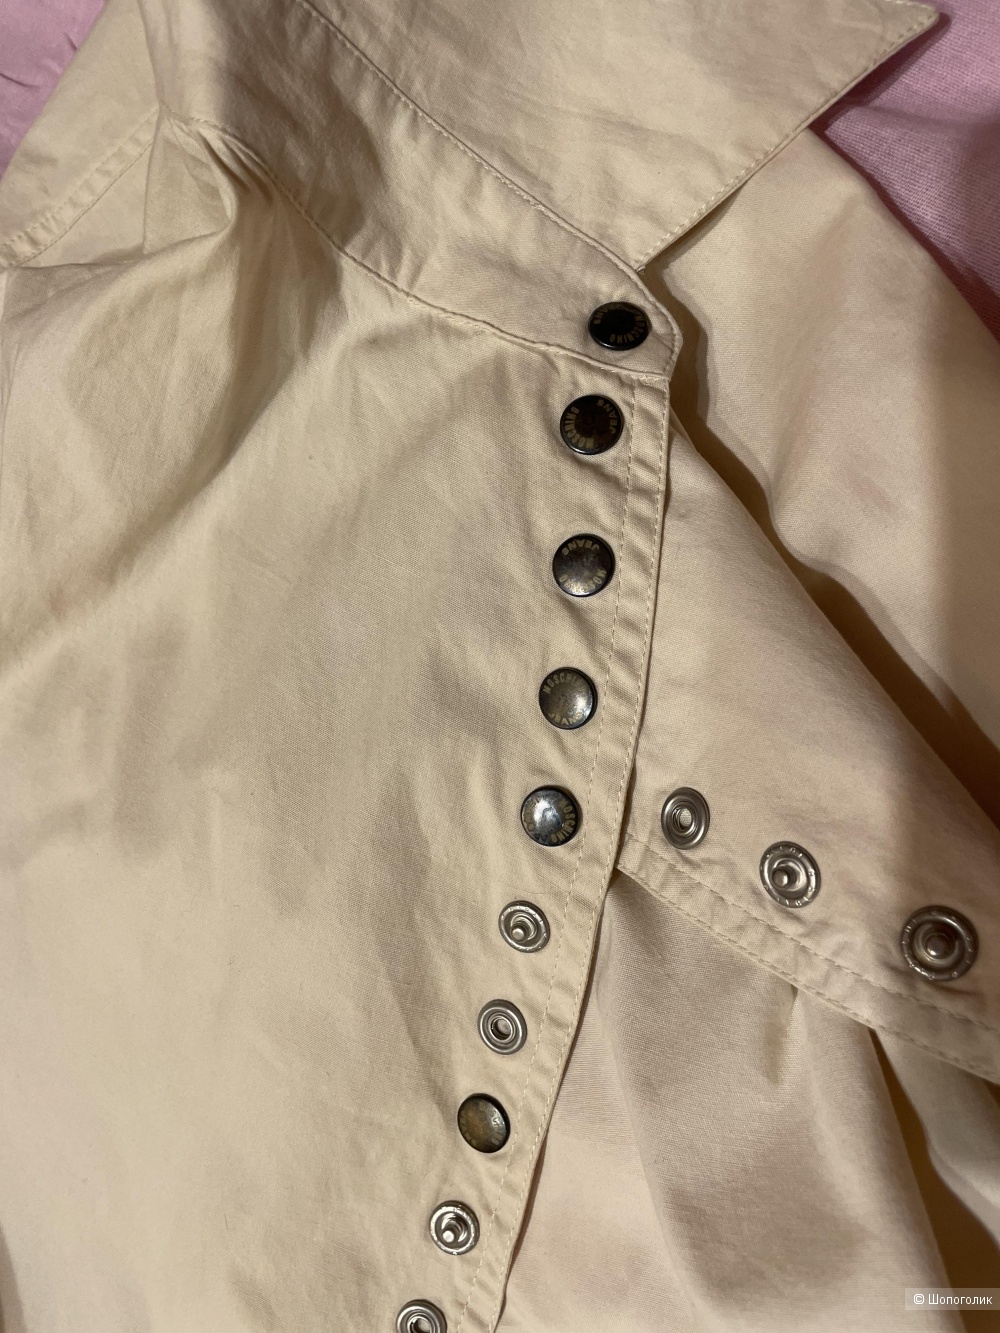 Рубашка женская Moschino jeans (I 40 USA 6)